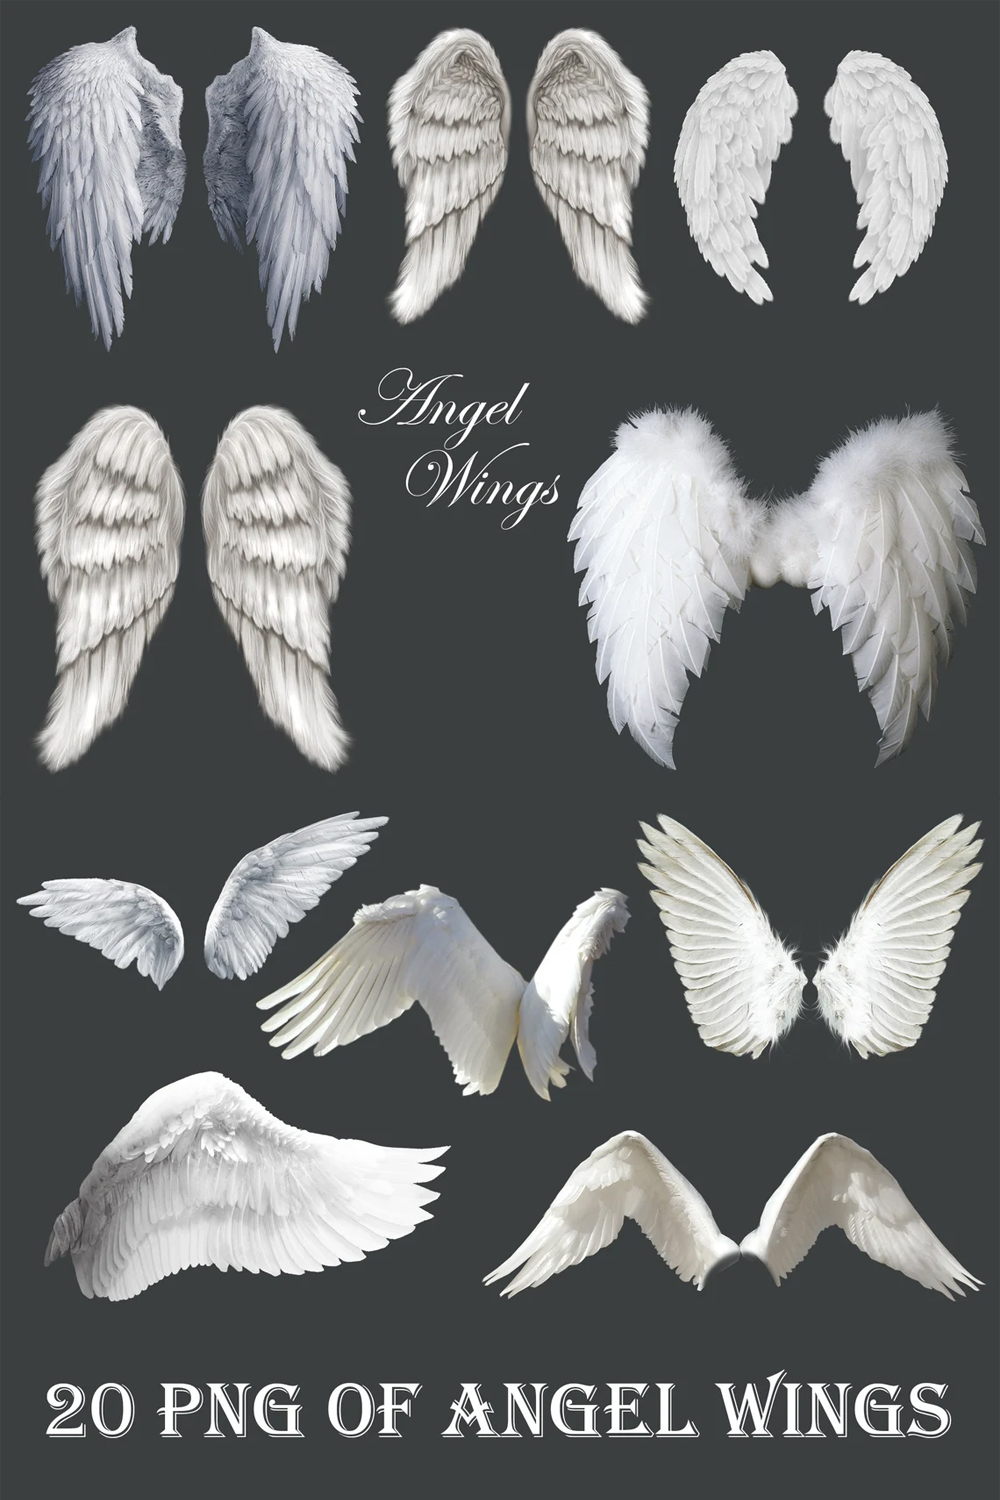 Angel wings clip art of pinterest.